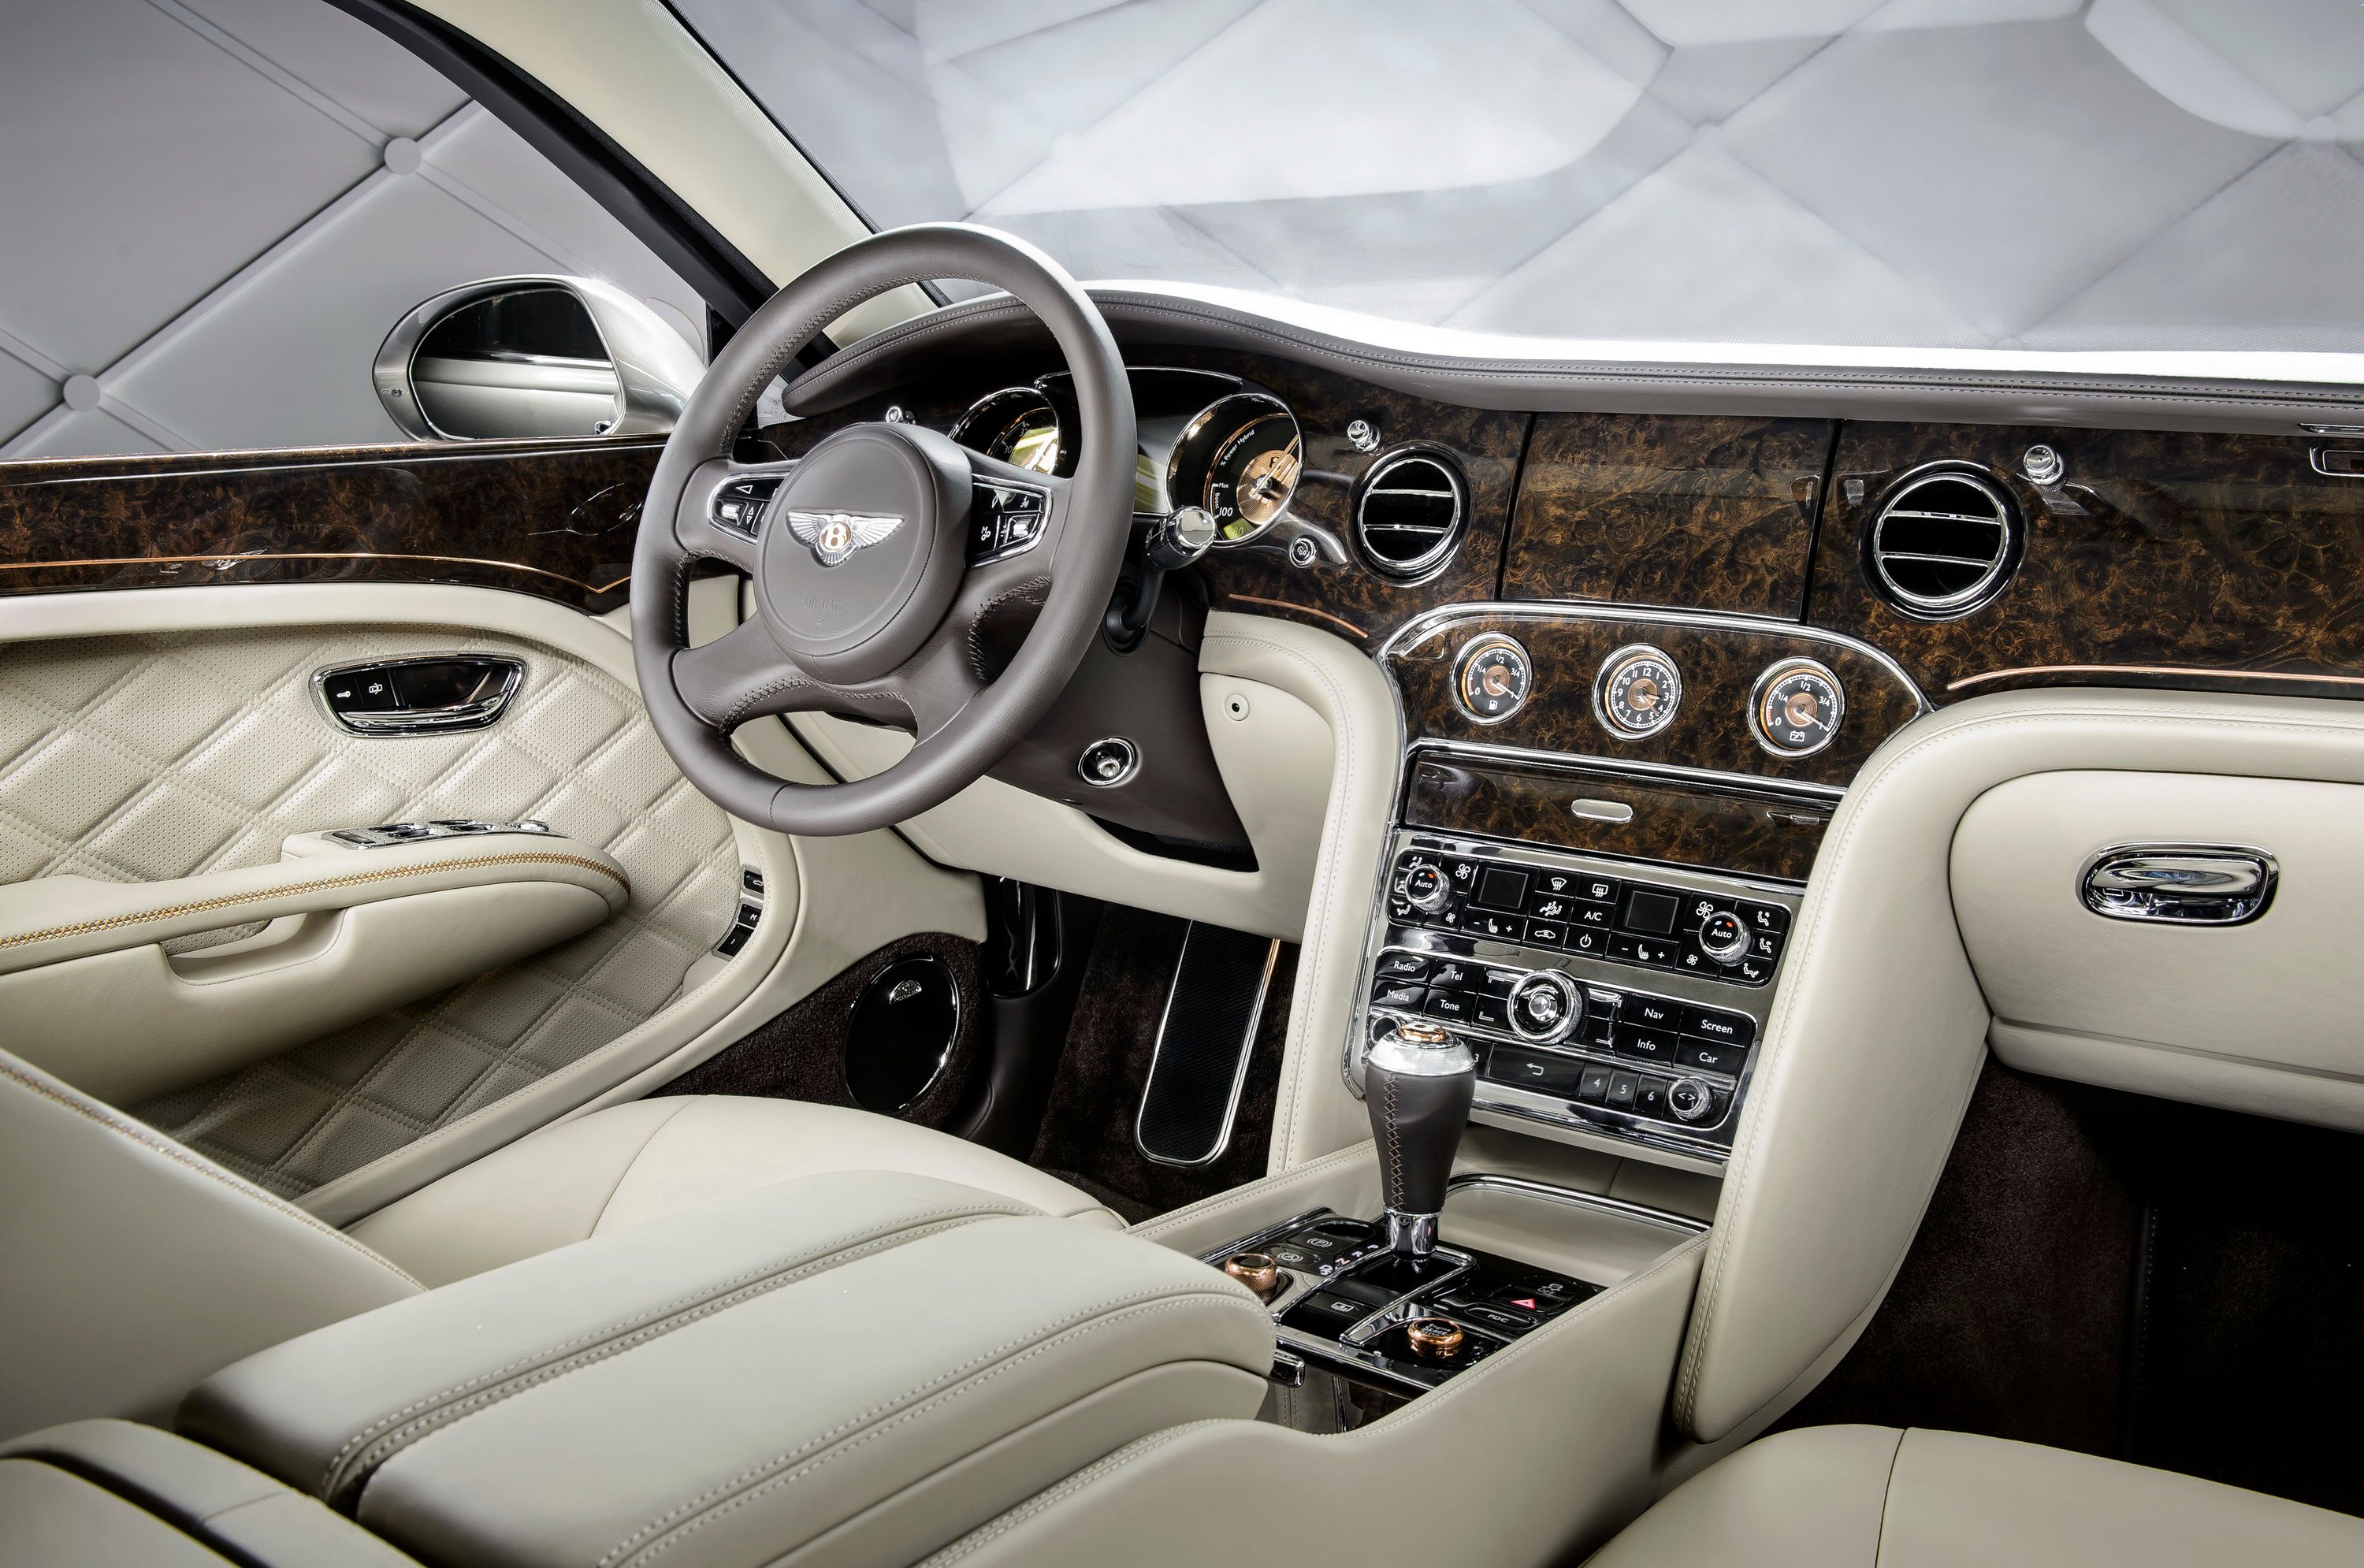 2014 Bentley Hybrid Concept